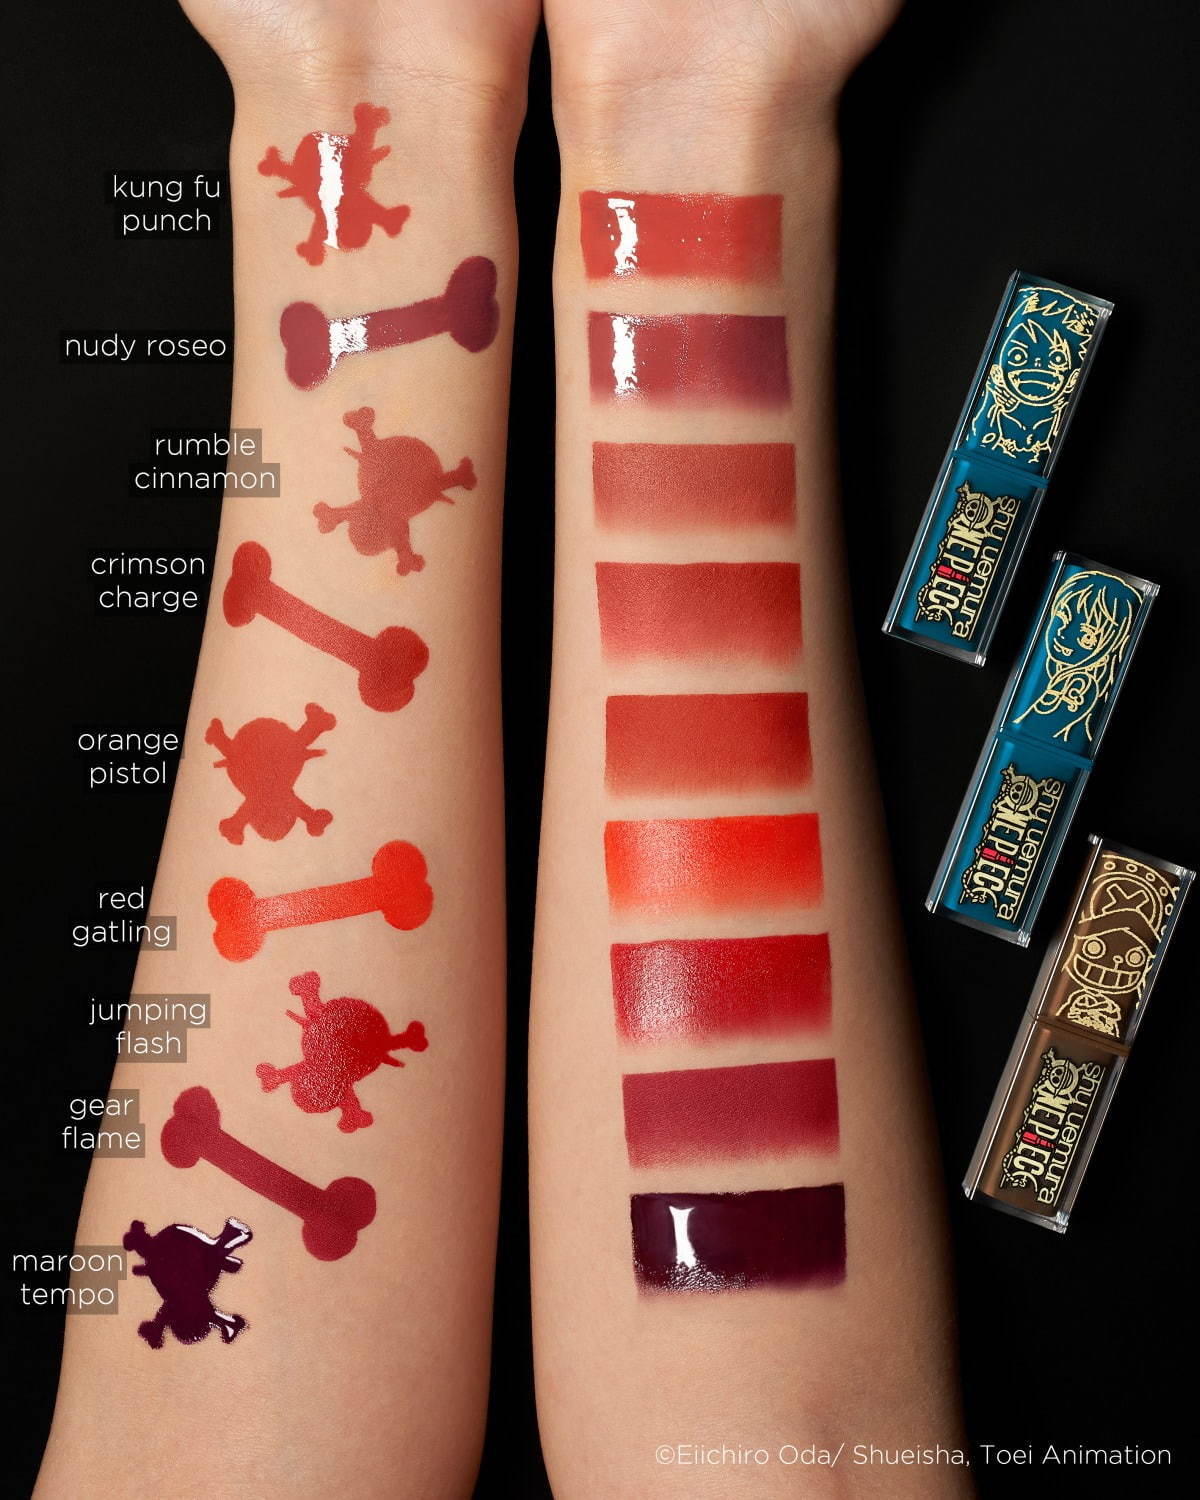 shu uemura one piece - lipstick swatches